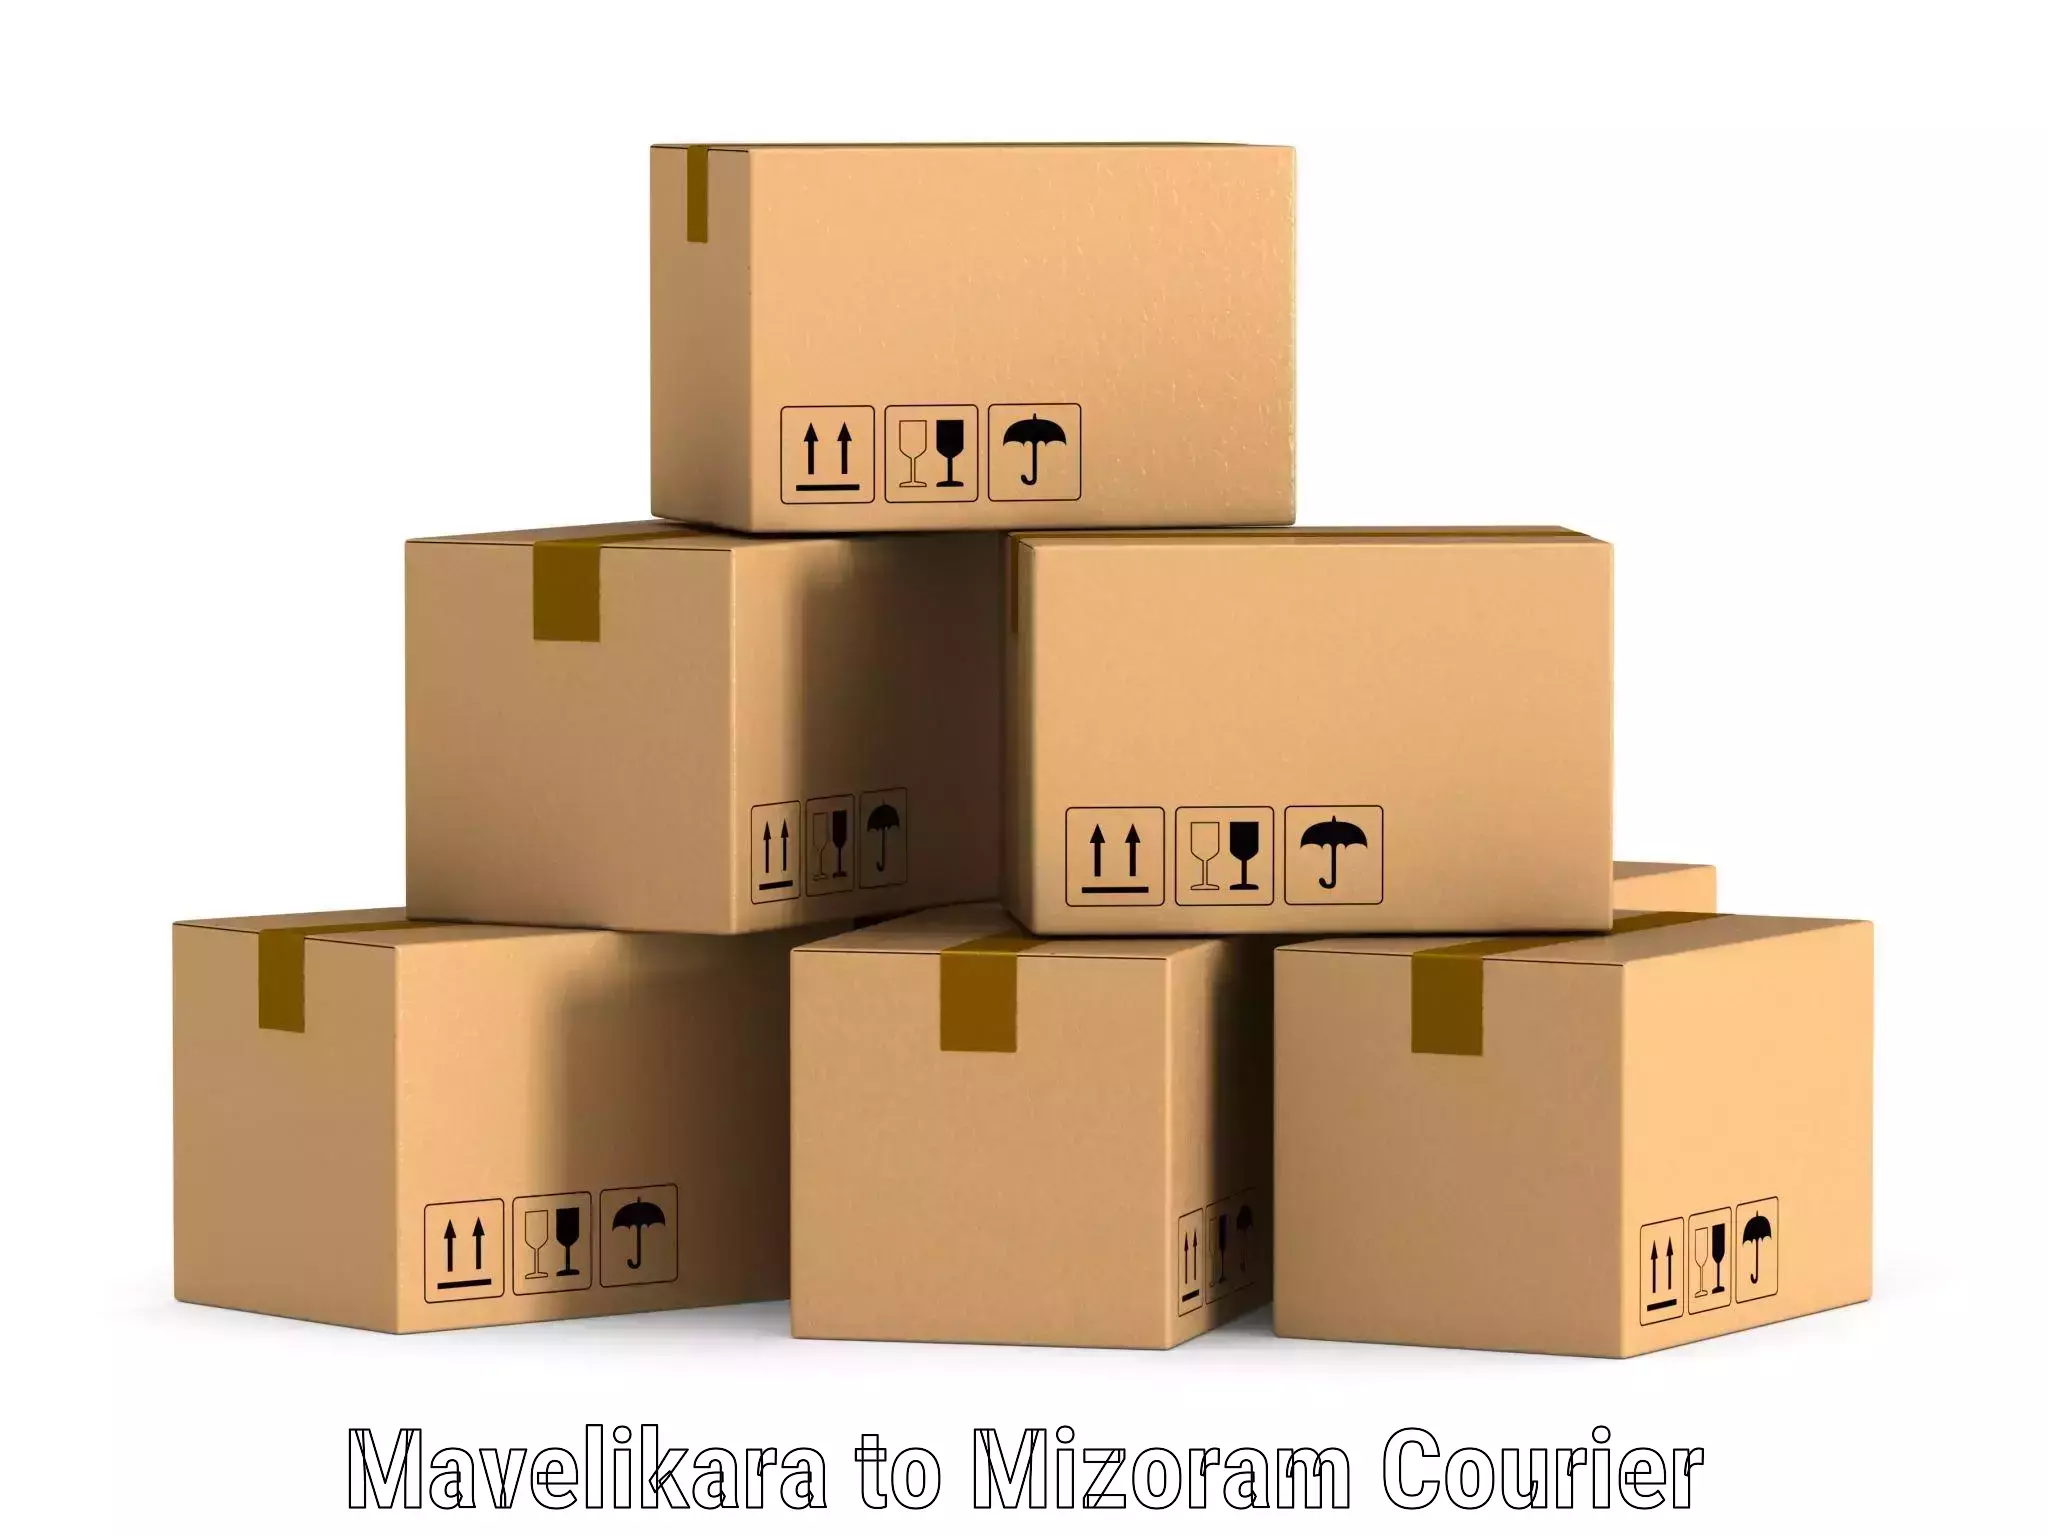 Global shipping networks Mavelikara to Mizoram